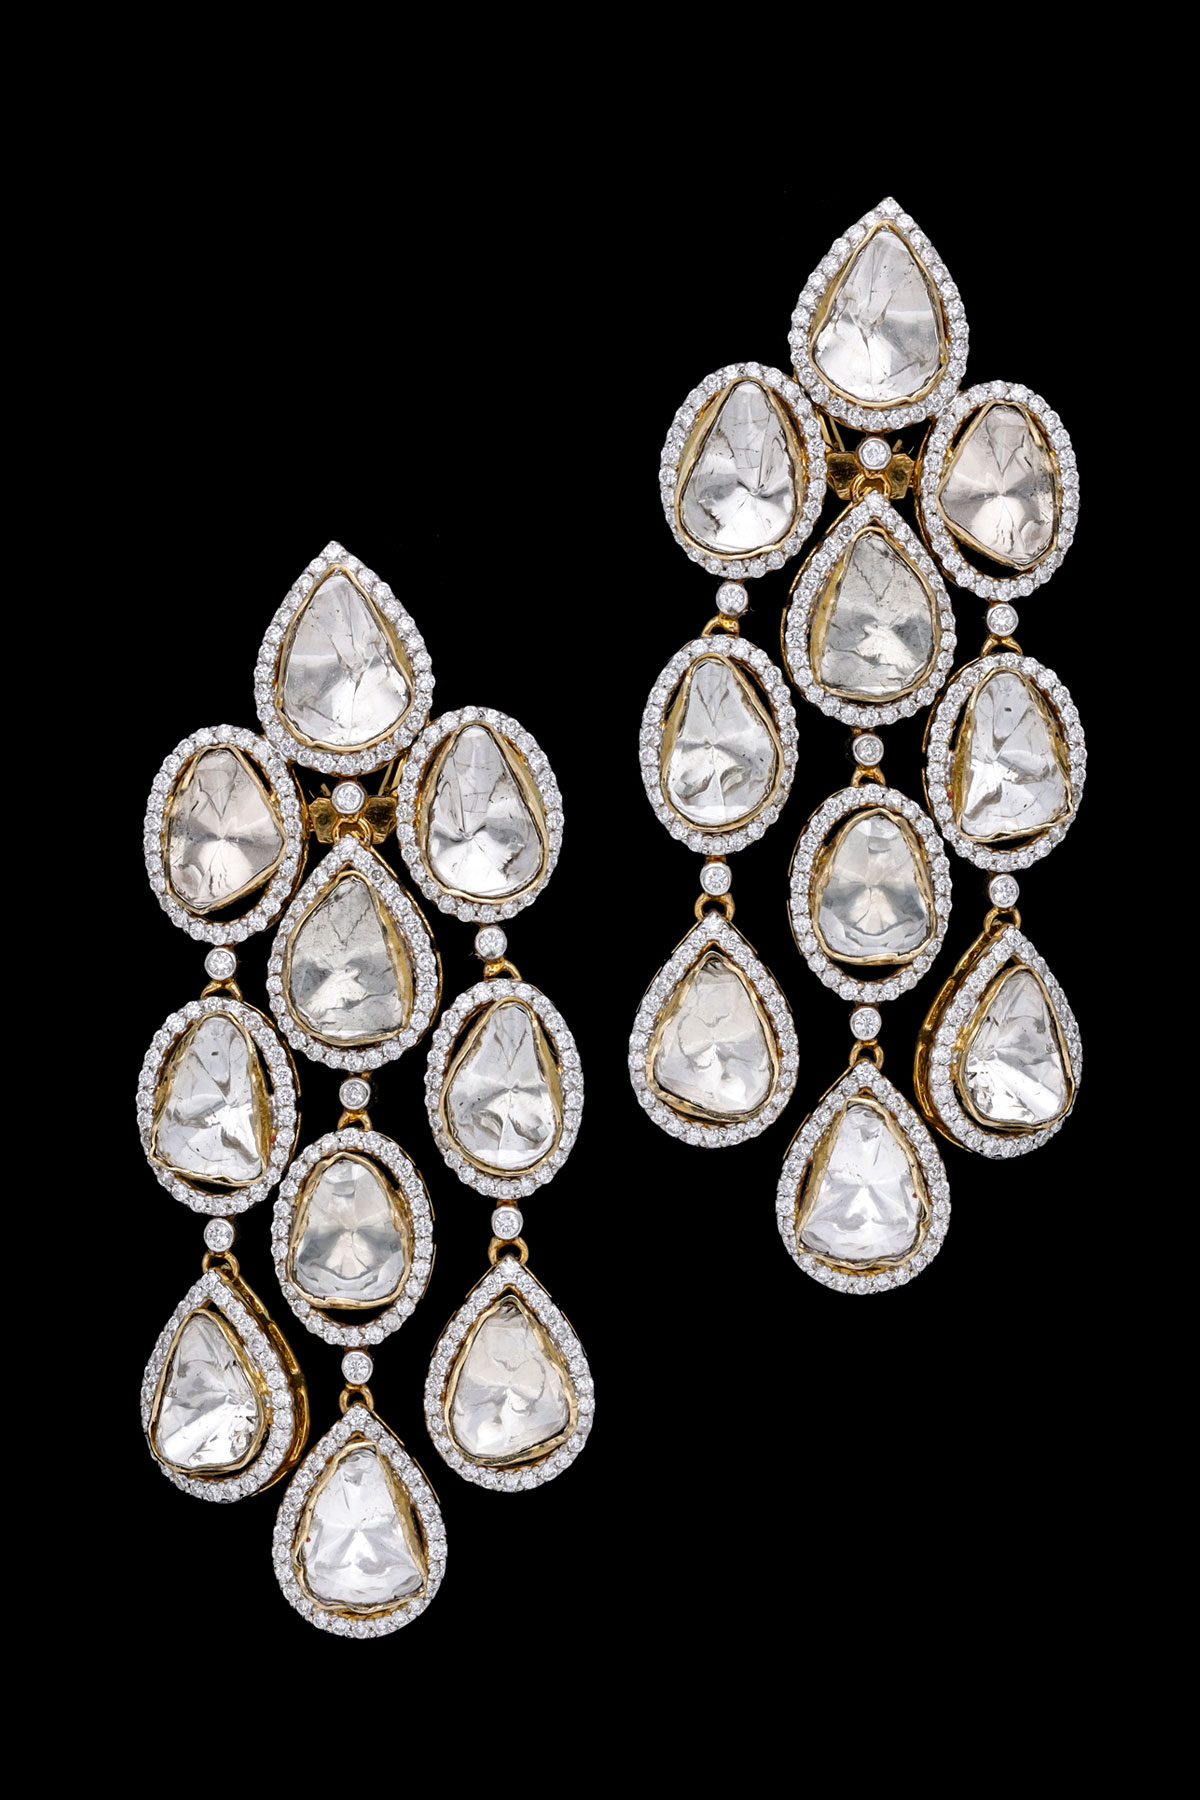 Dassani Brothers Reveal Bridal Jewellery Trousseau #MangalVivah.